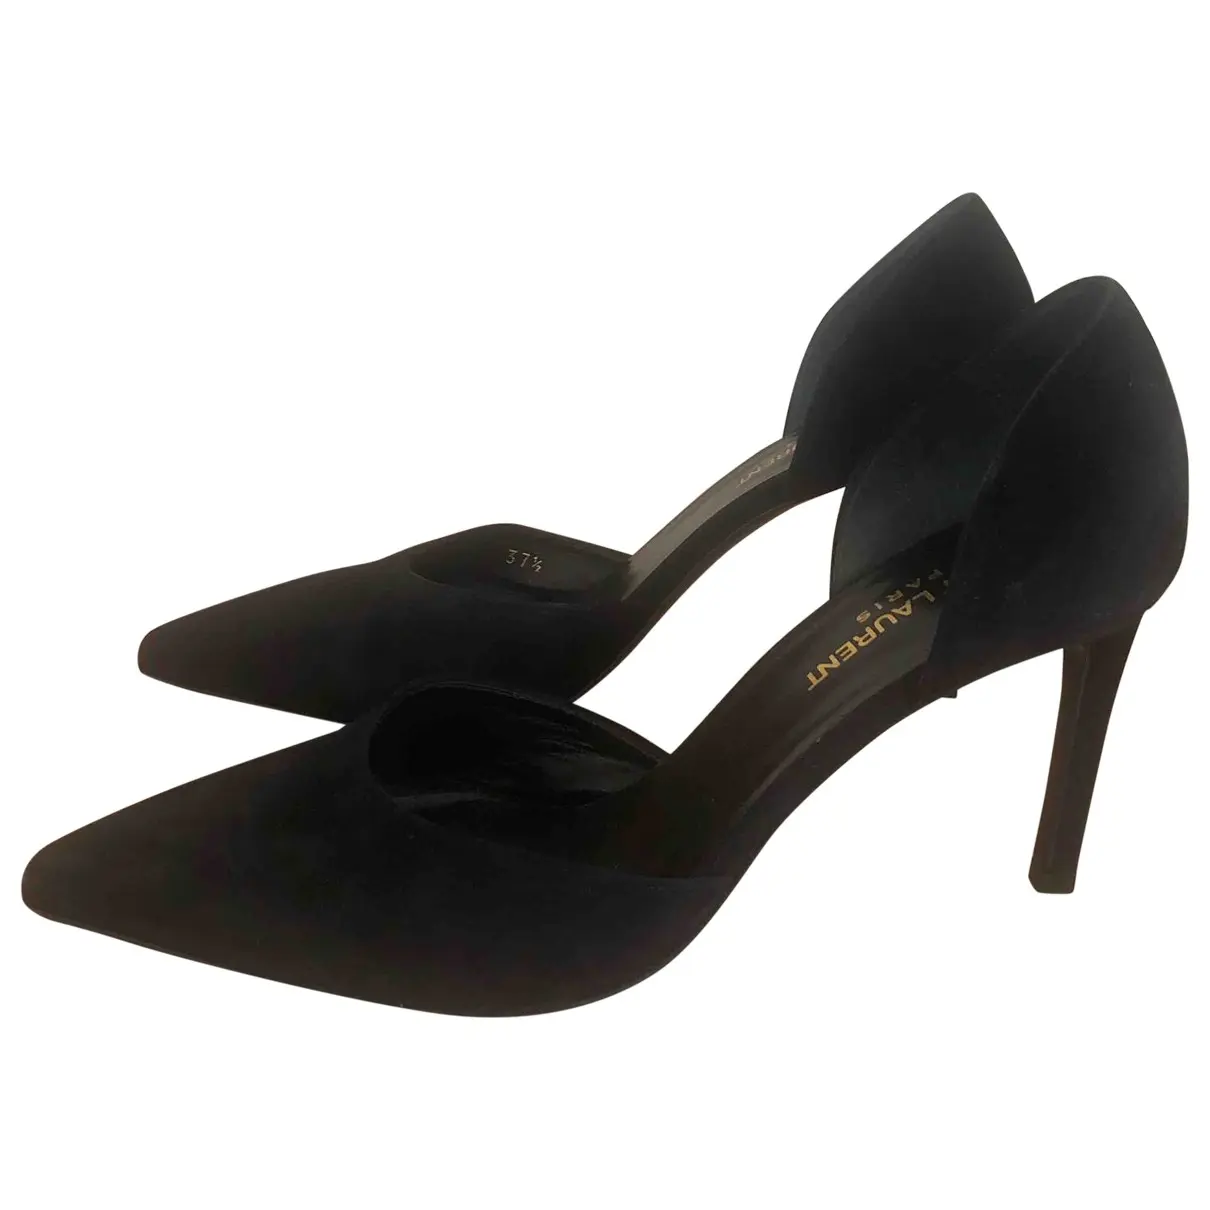 D'orsay heels Saint Laurent